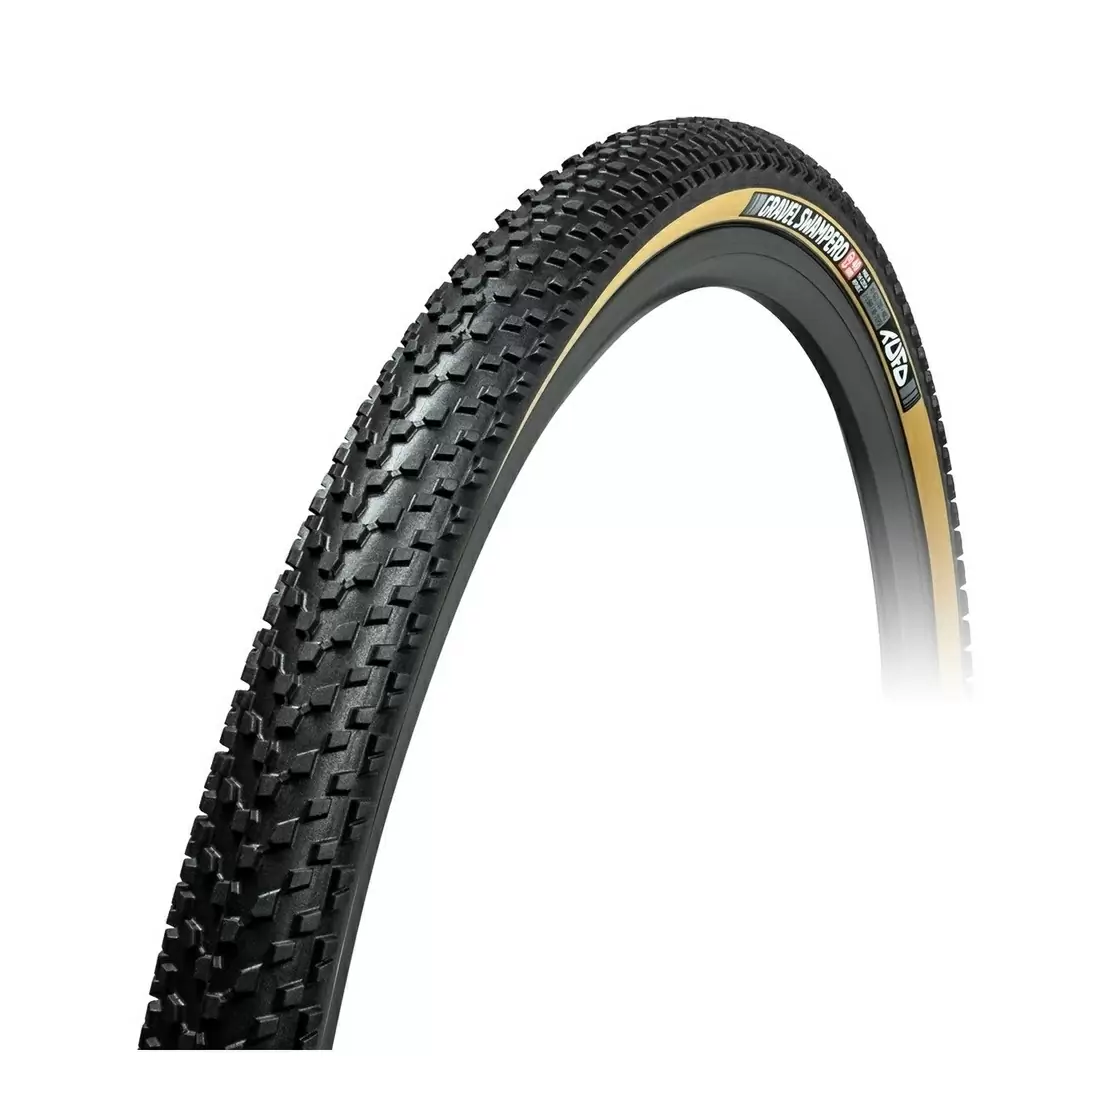 Swampero Tubeless Gravel-Cyclocross Tyre 700x40 Black/Para - image